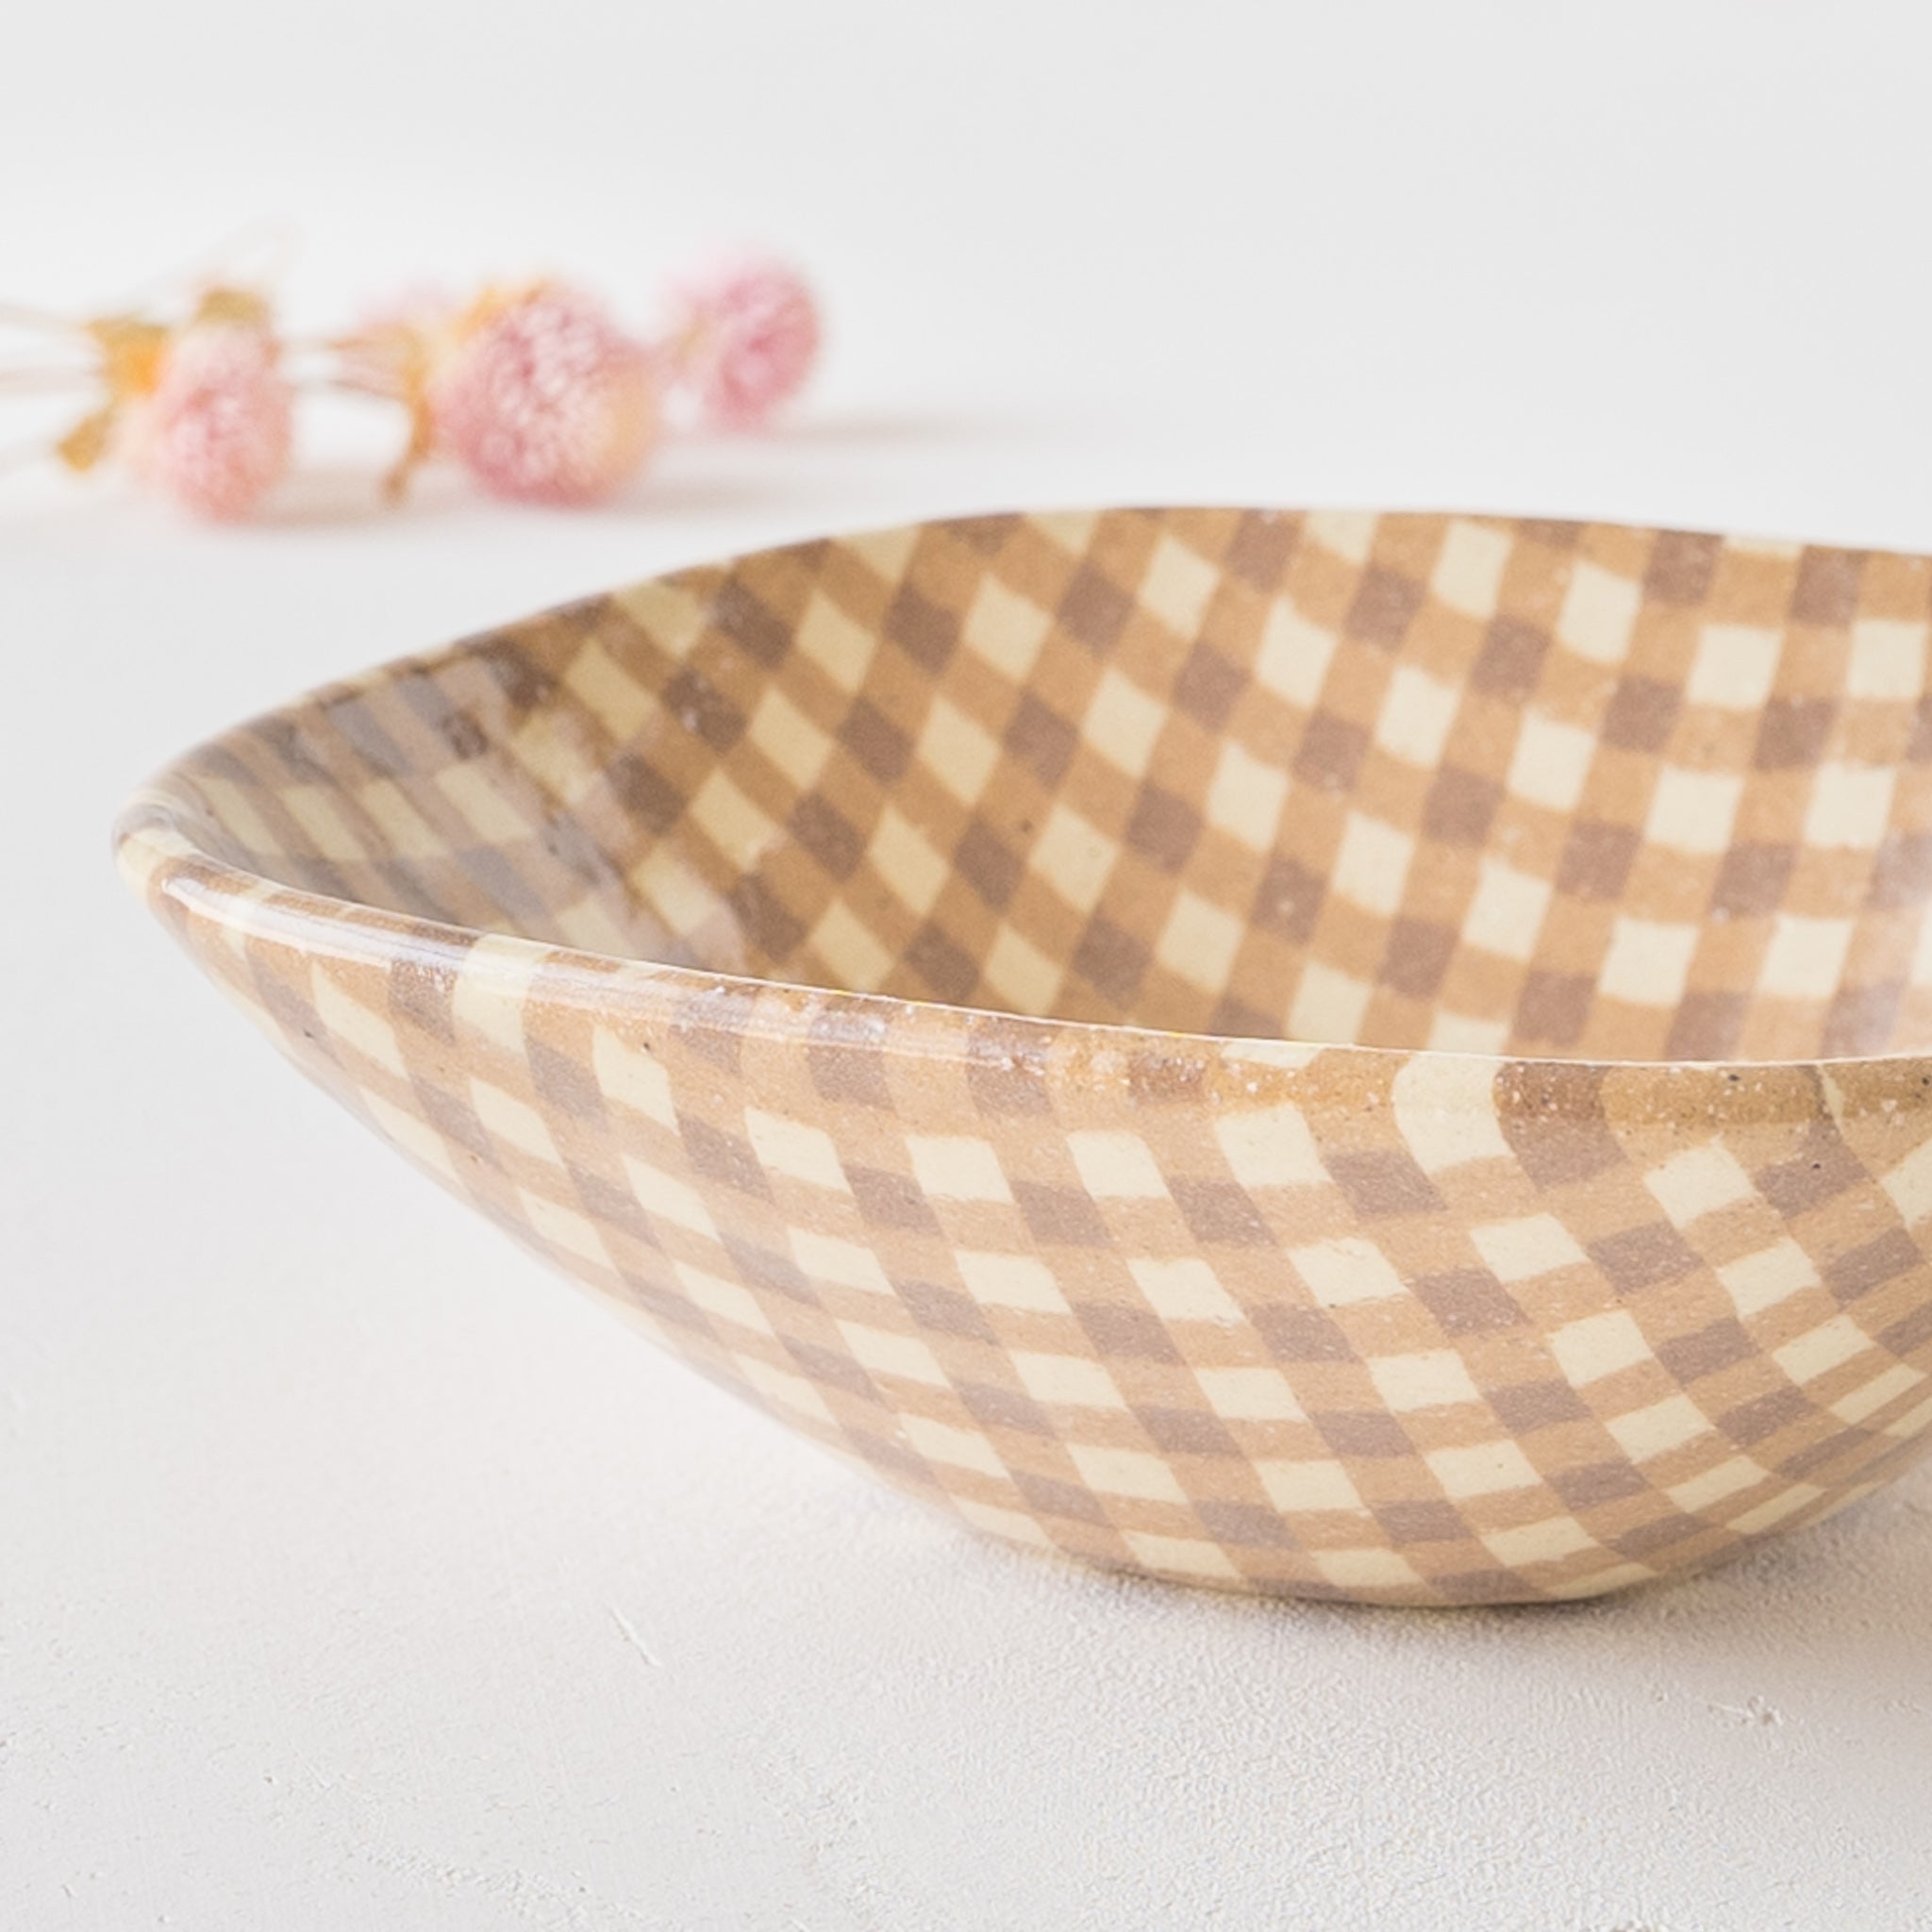 Fashionable and cute Hanako Sakashita's cereal bowl